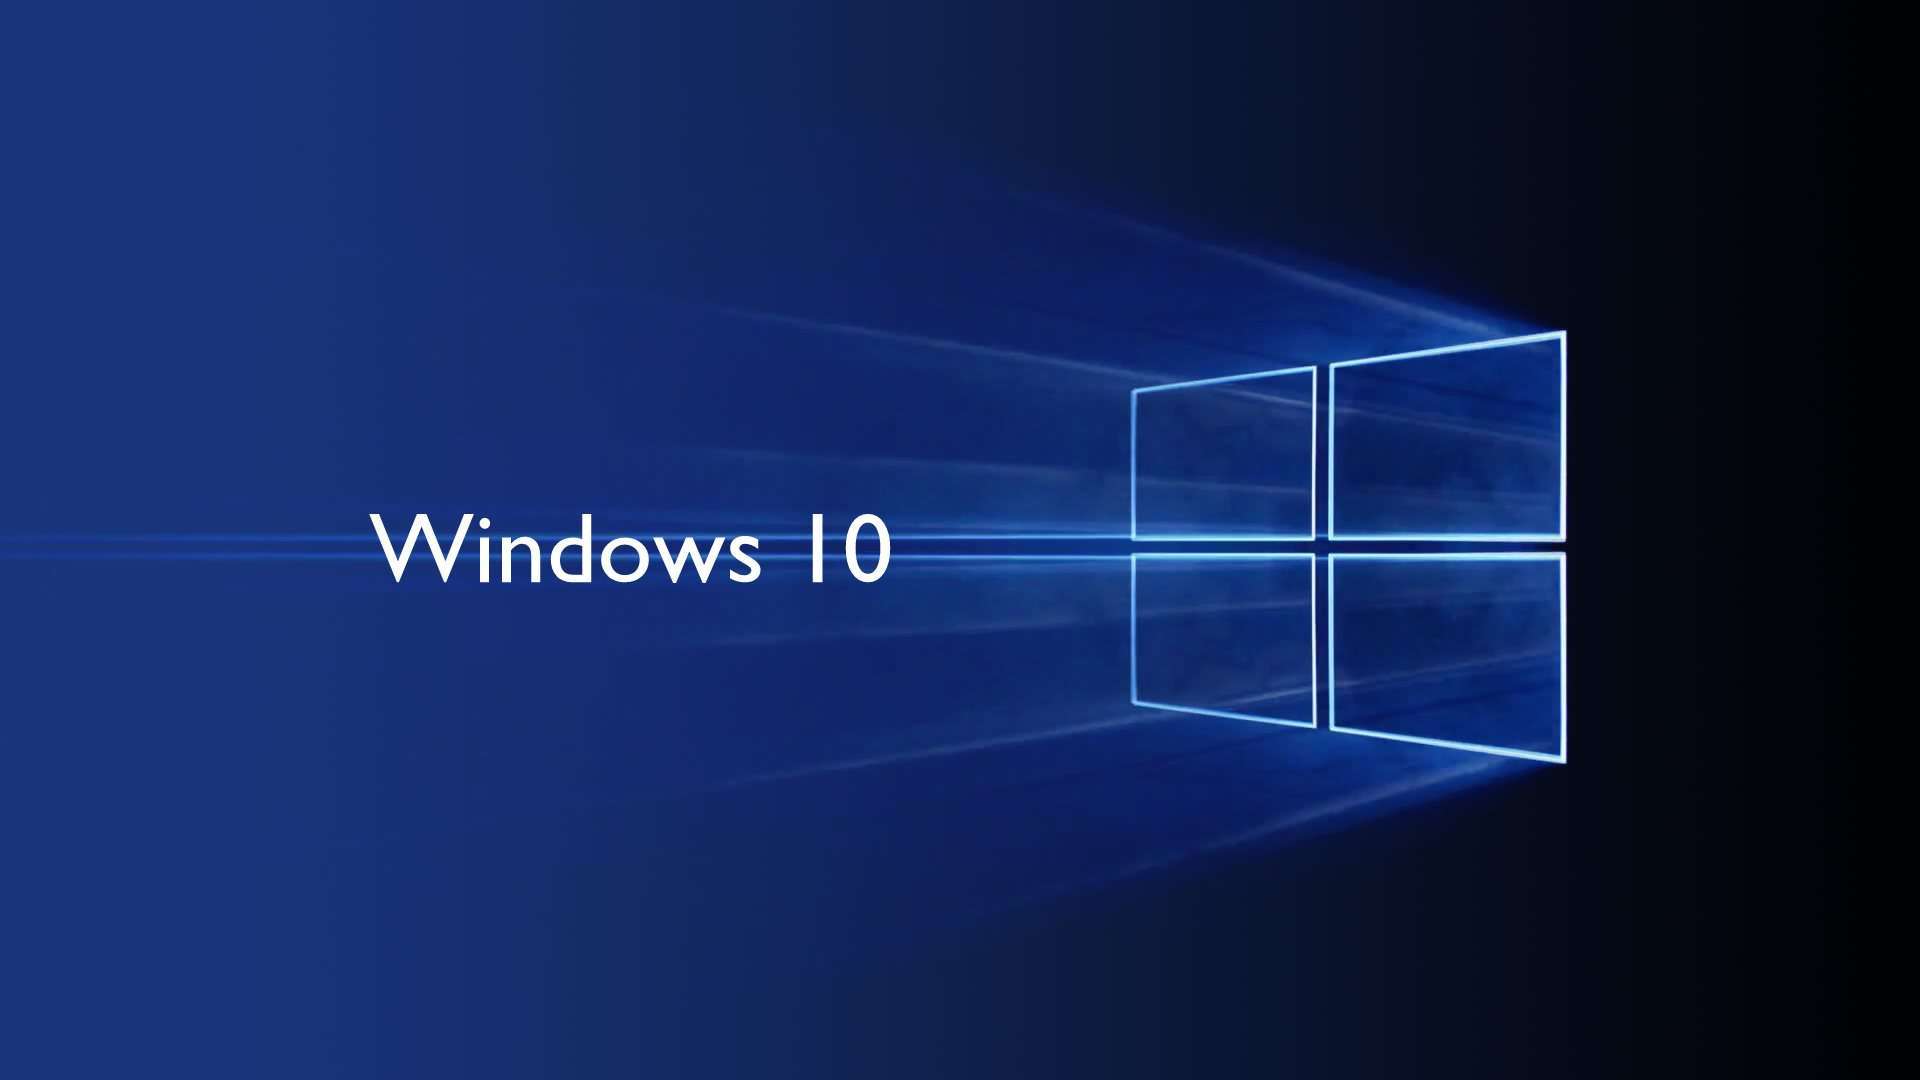 Wallpaper Windows 10 Hd Desktop 1080p Upload at August 1 2015 by